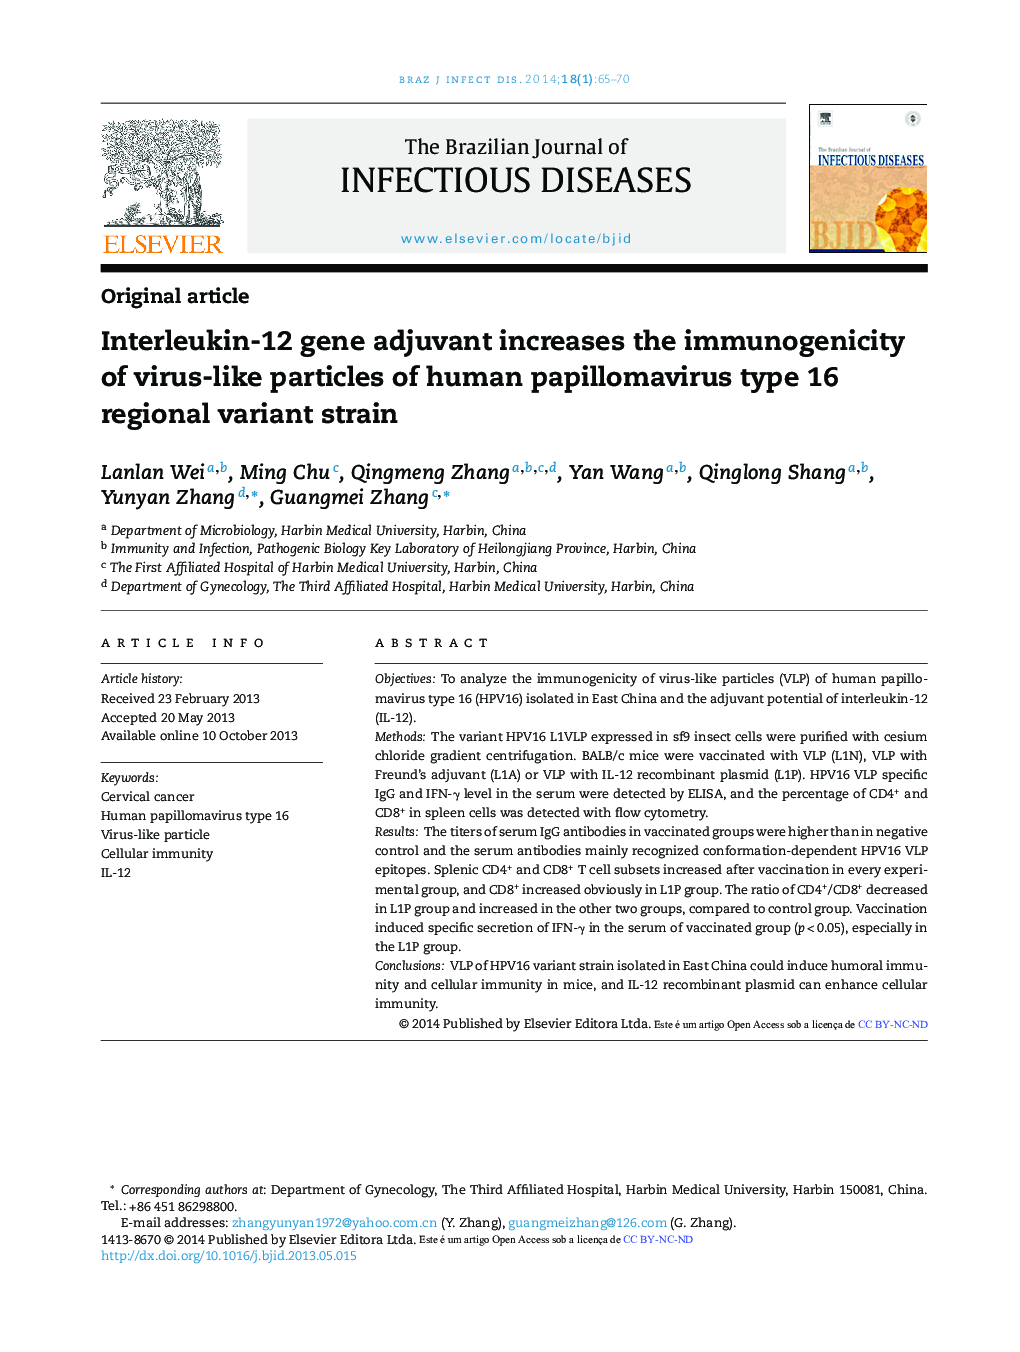 Interleukin-12 gene adjuvant increases the immunogenicity of virus-like particles of human papillomavirus type 16 regional variant strain